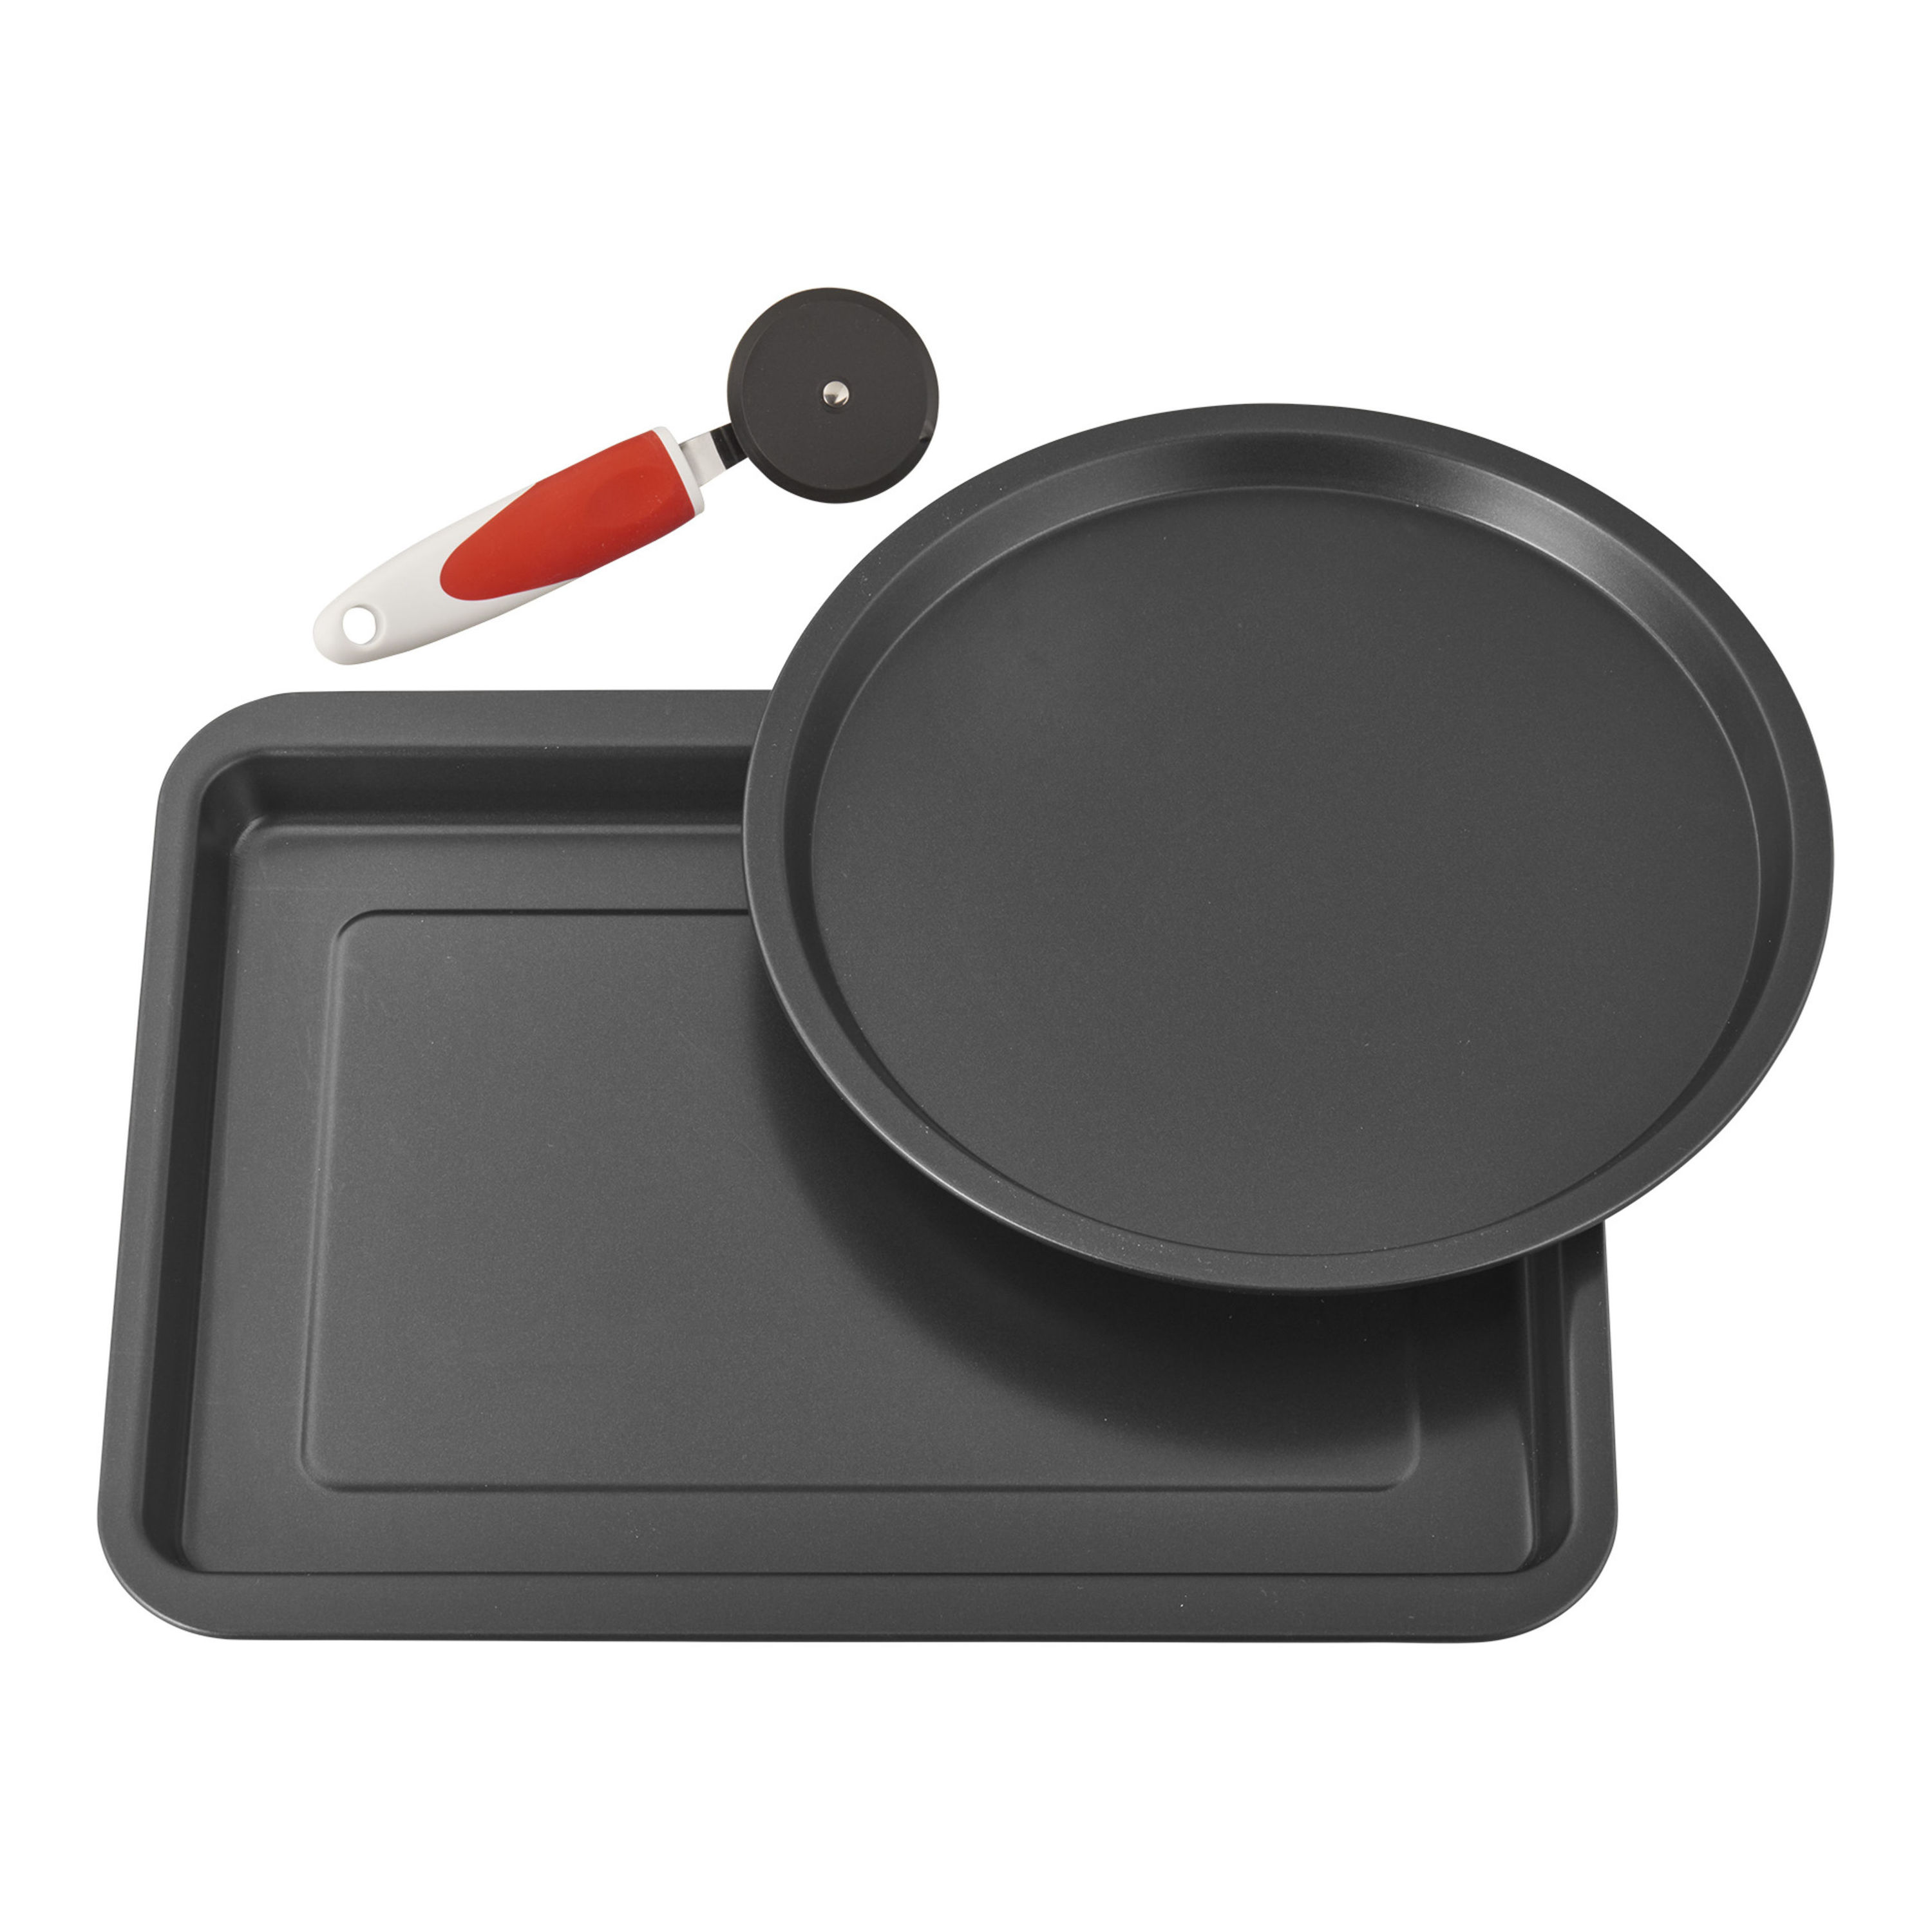  Ballarini 75000-585 Bologna Frying Pan, 7.9 inches (20 cm),  Induction Compatible, Ceramic Coating, Dishwasher Safe: Home & Kitchen